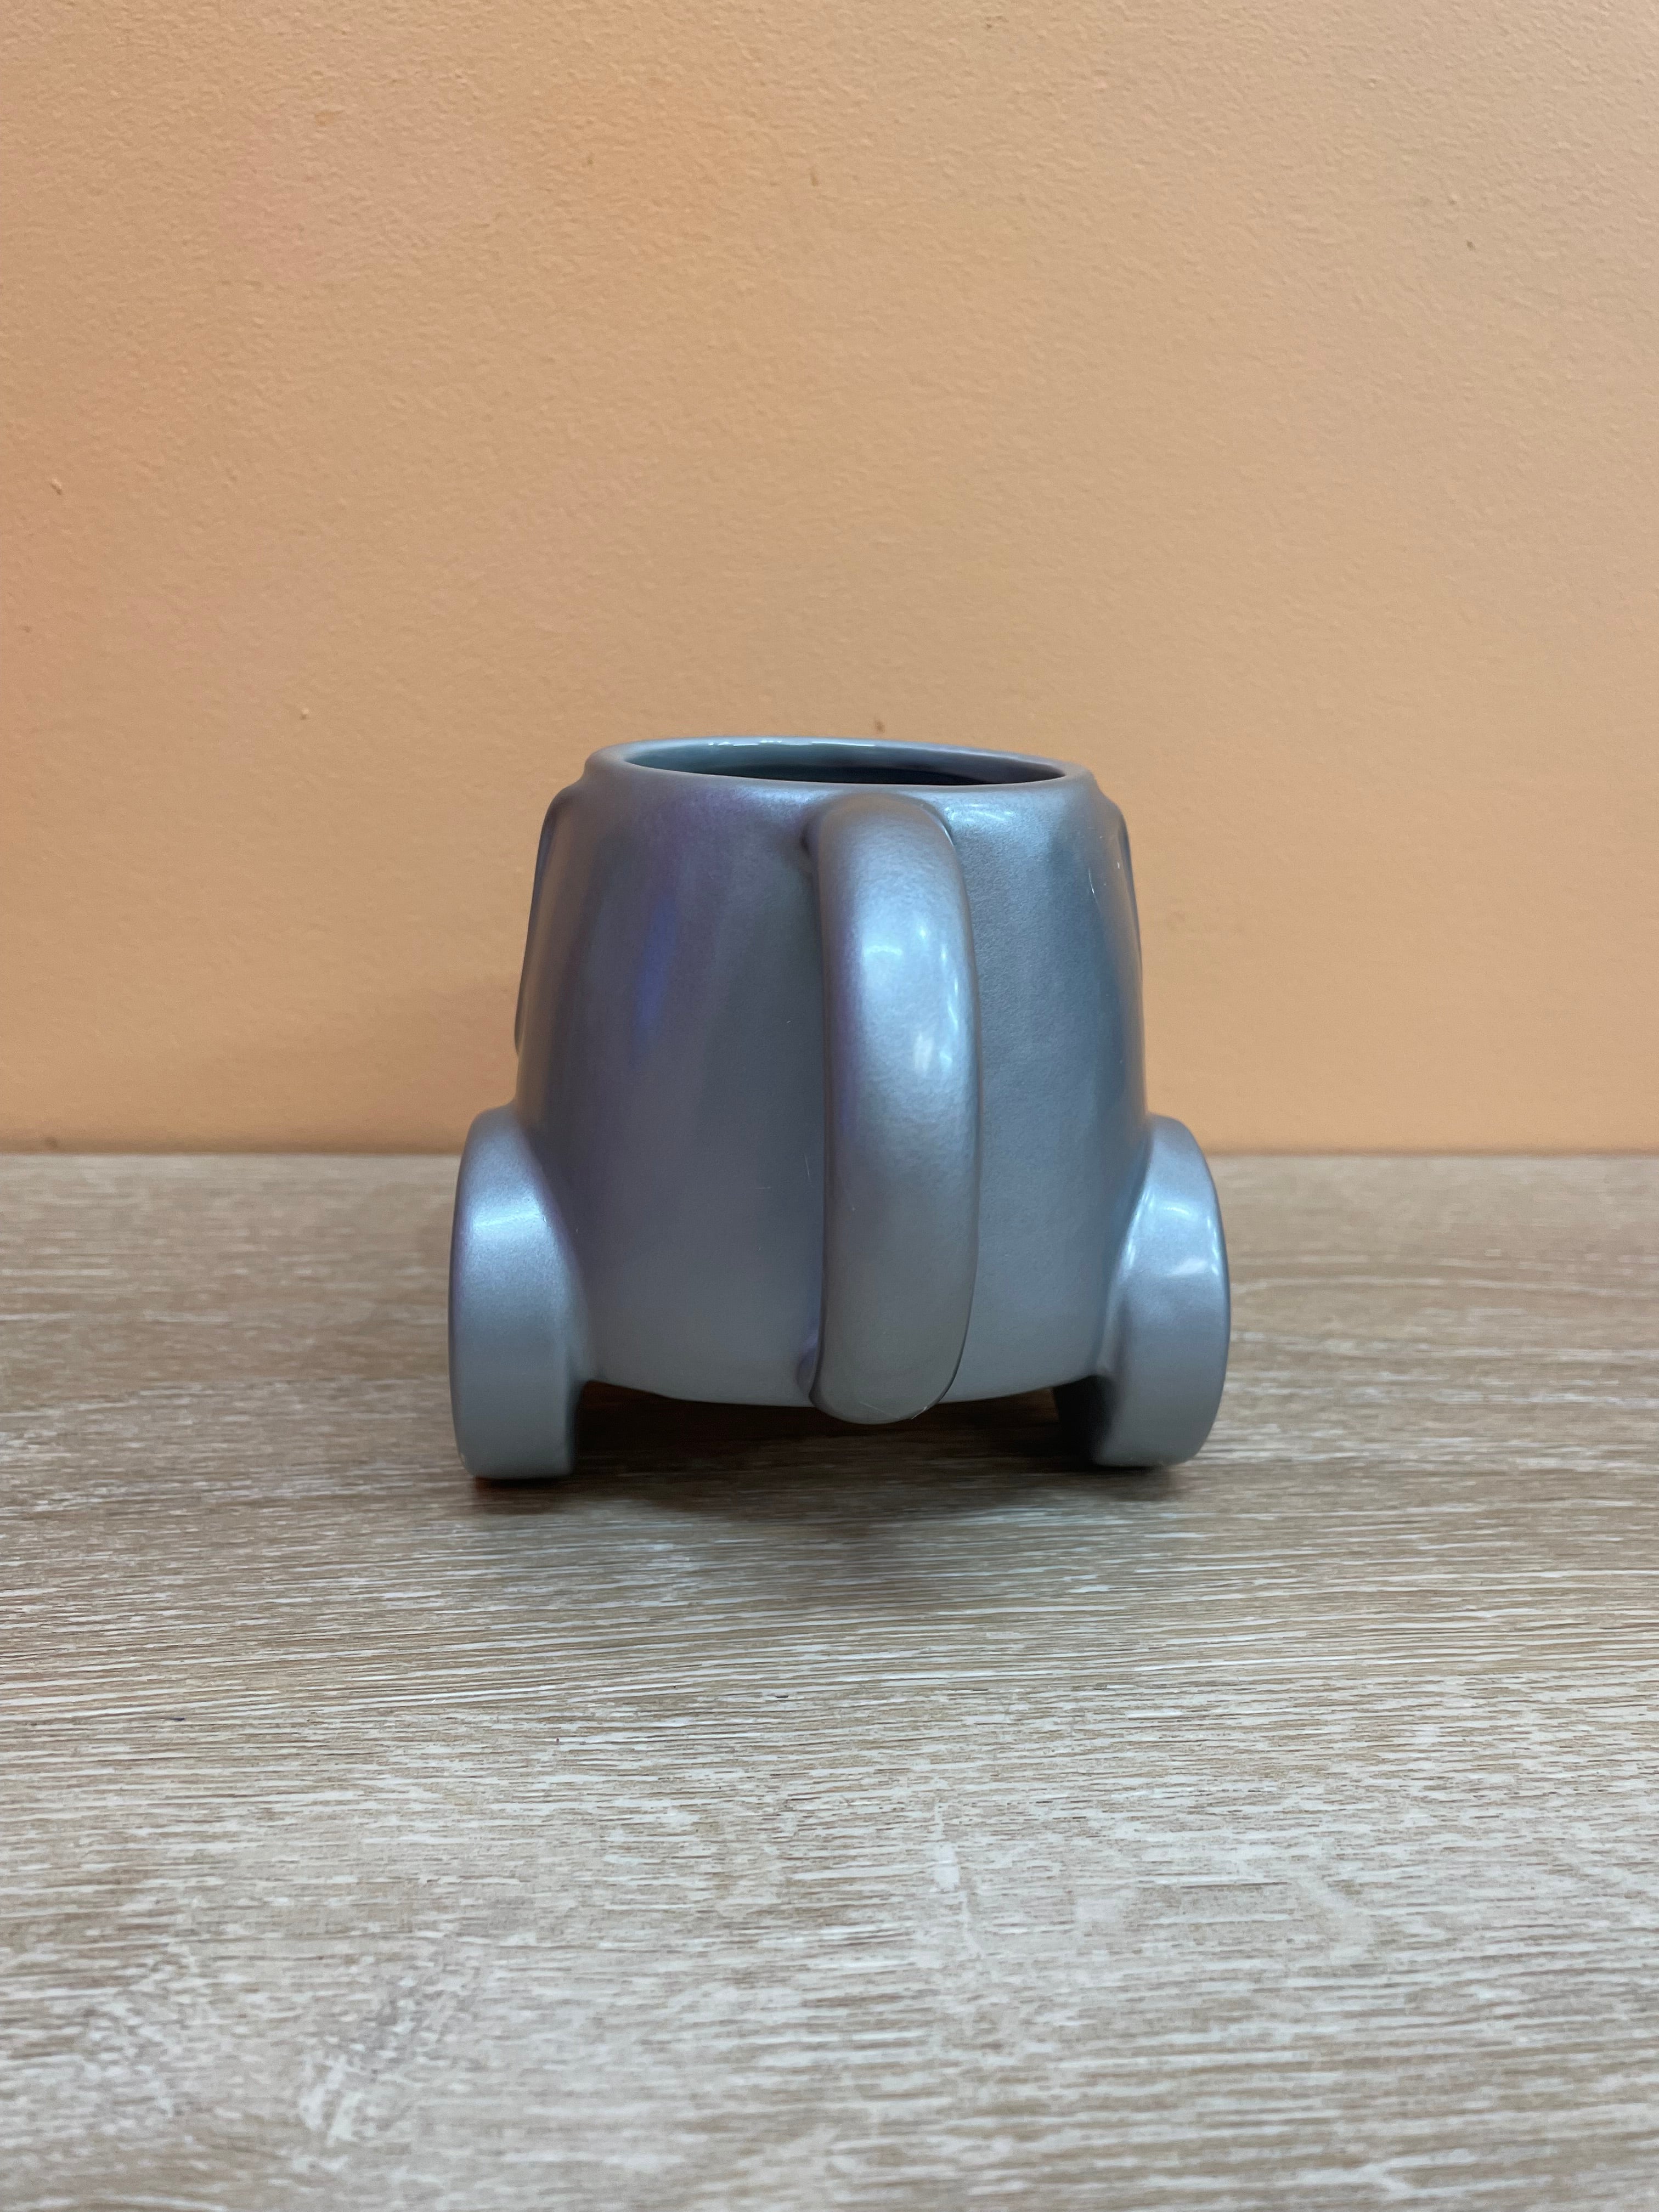 Monopoly Car Mug (2 available)